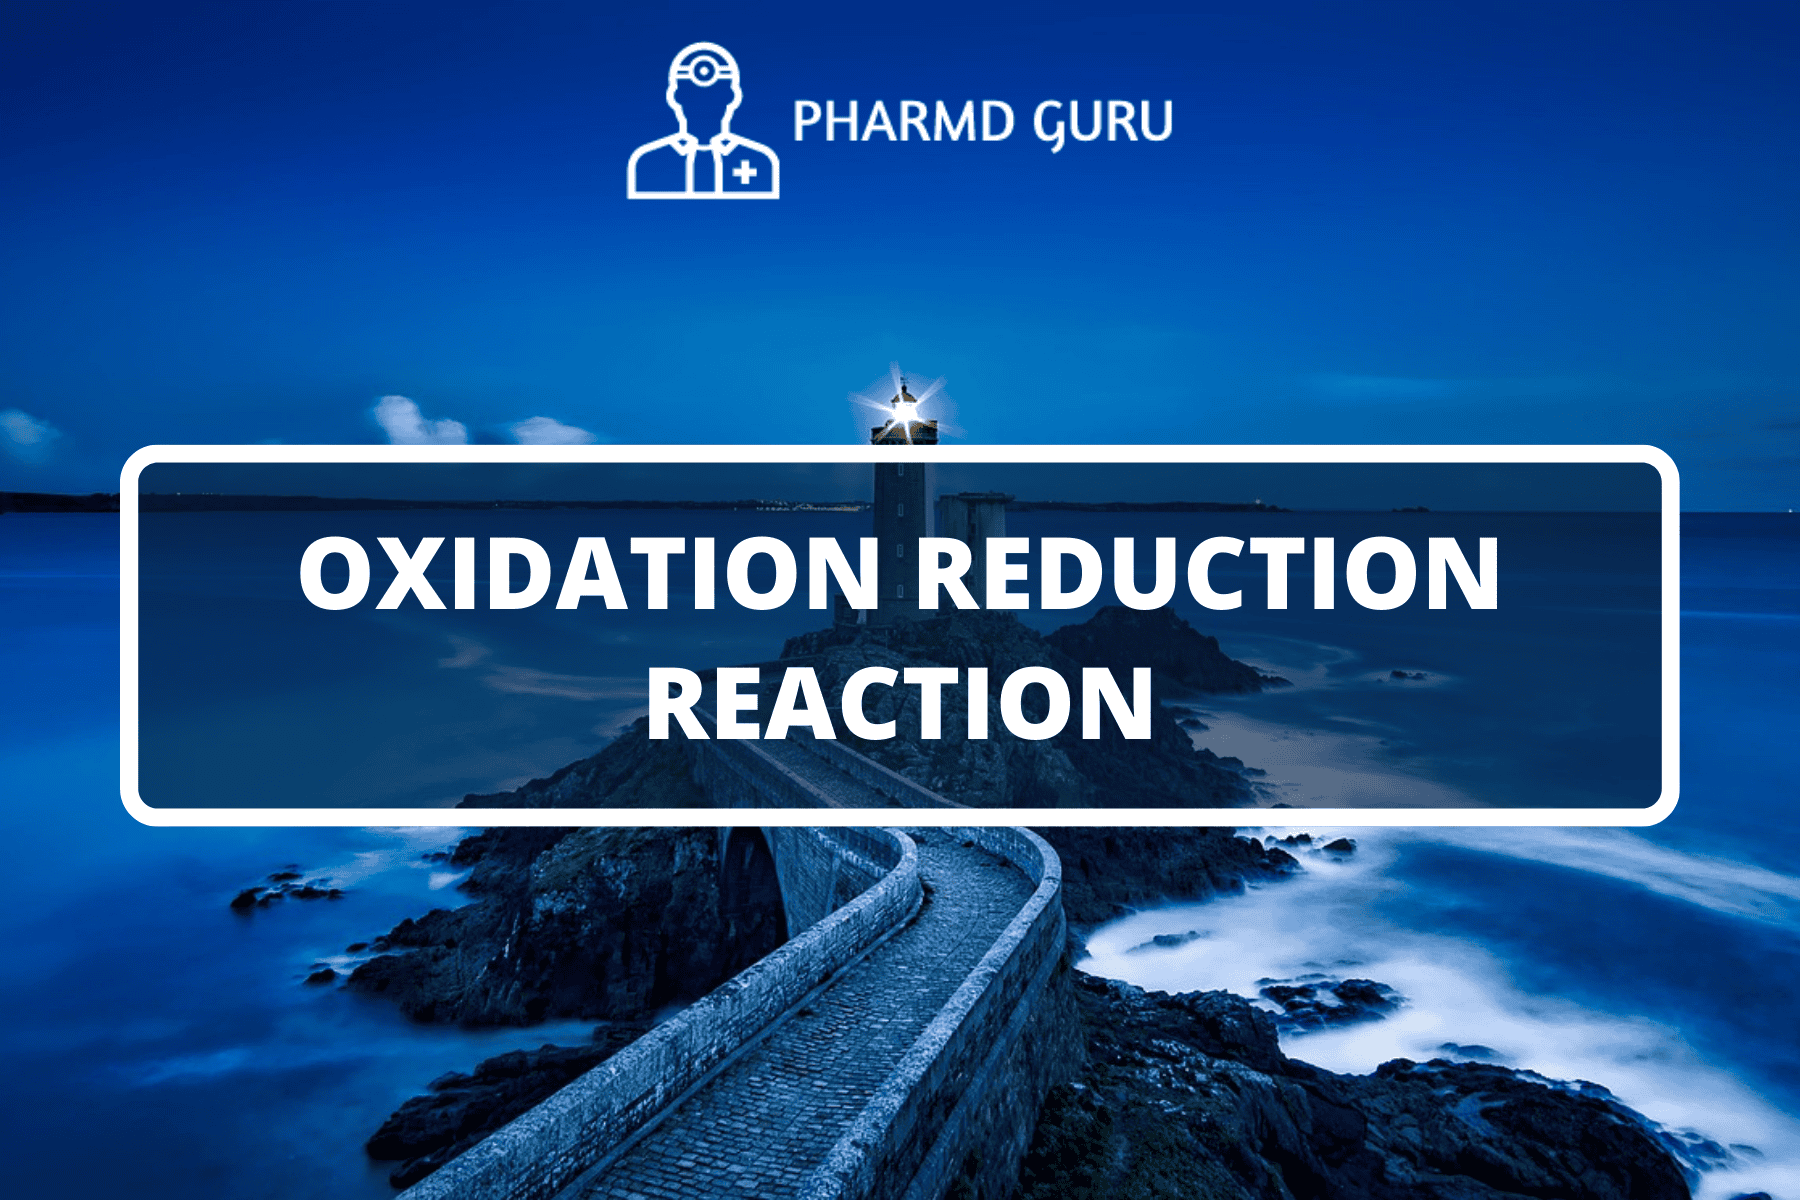 42. OXIDATION REDUCTION REACTION - PHARMD GURU